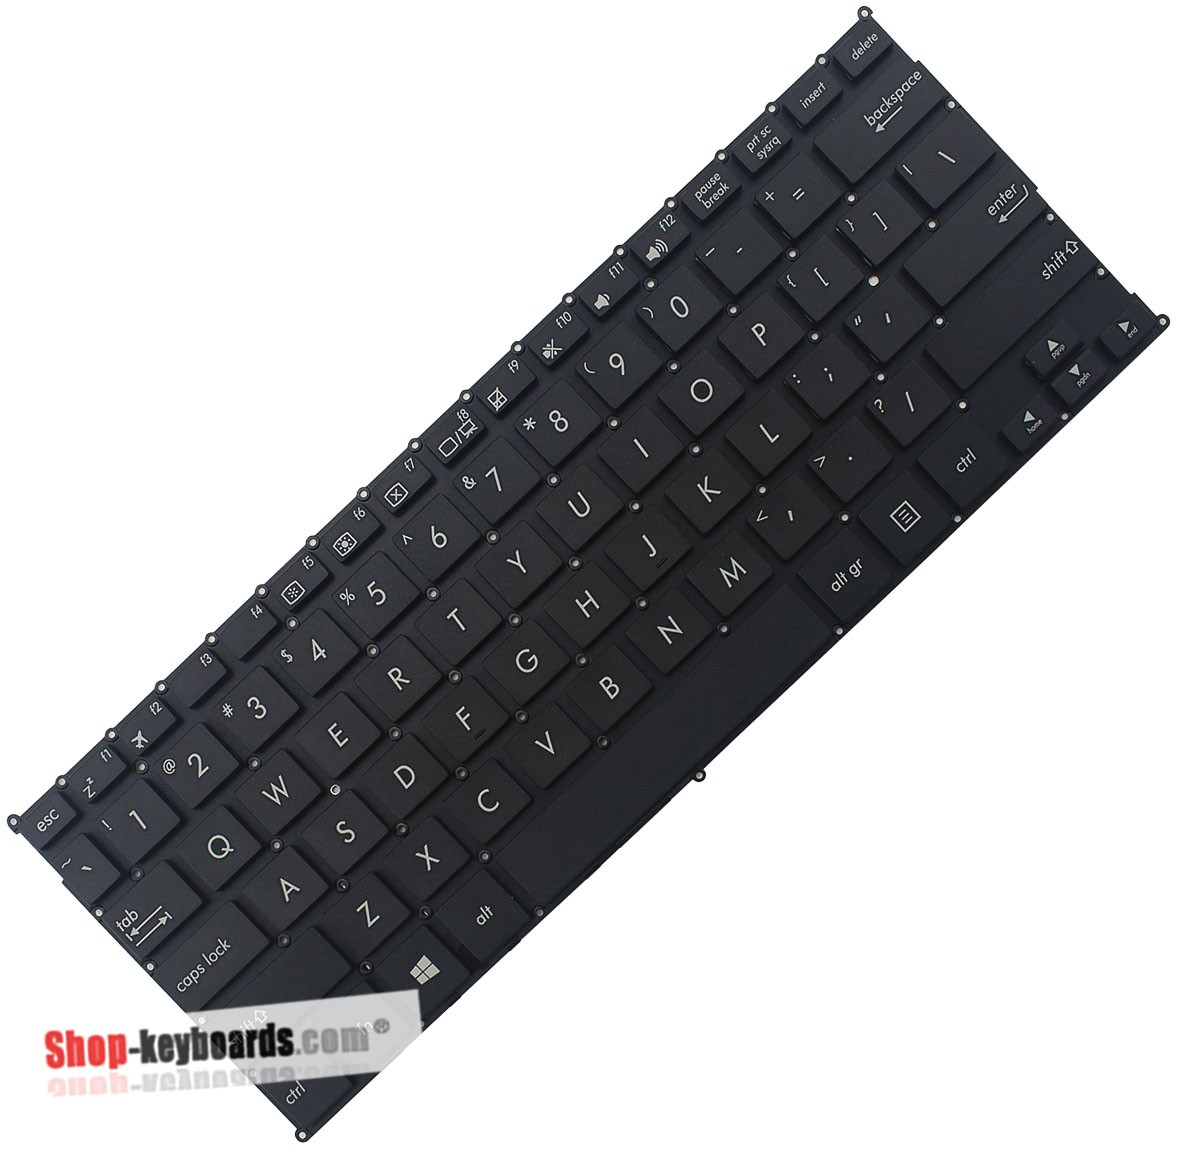 Asus VivoBook X200CA-9B Keyboard replacement